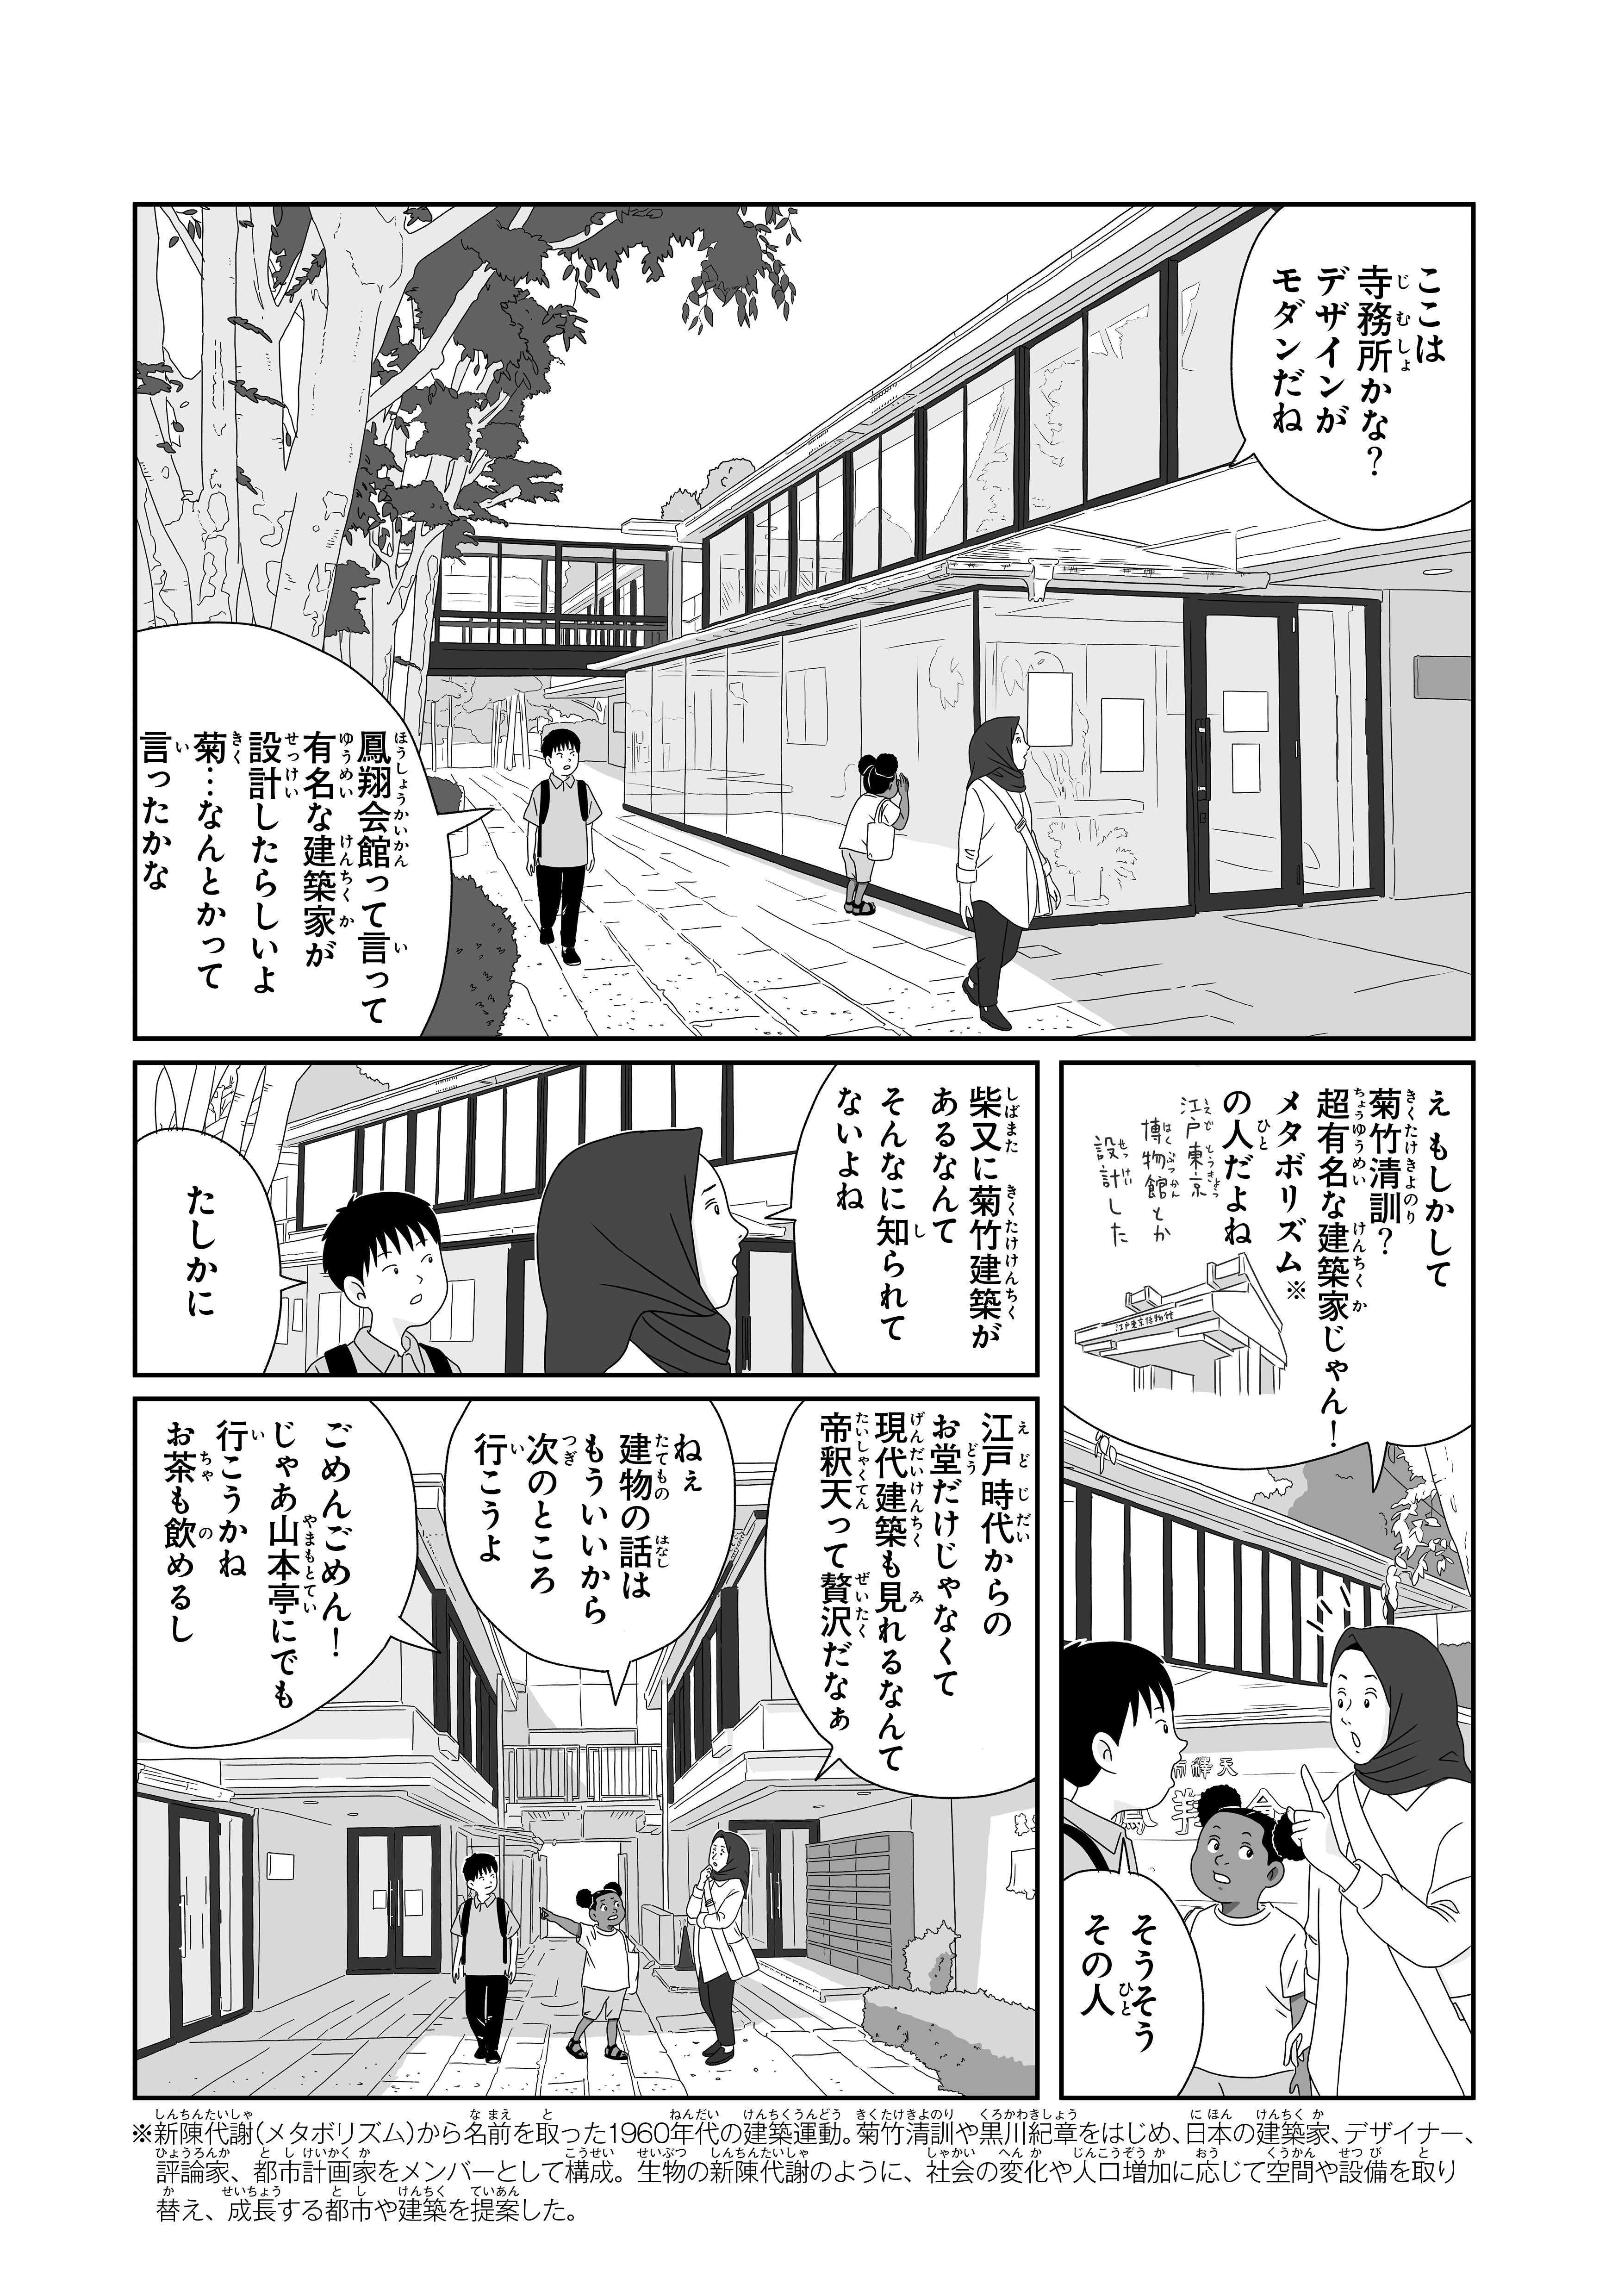 machimachi01_48.jpg